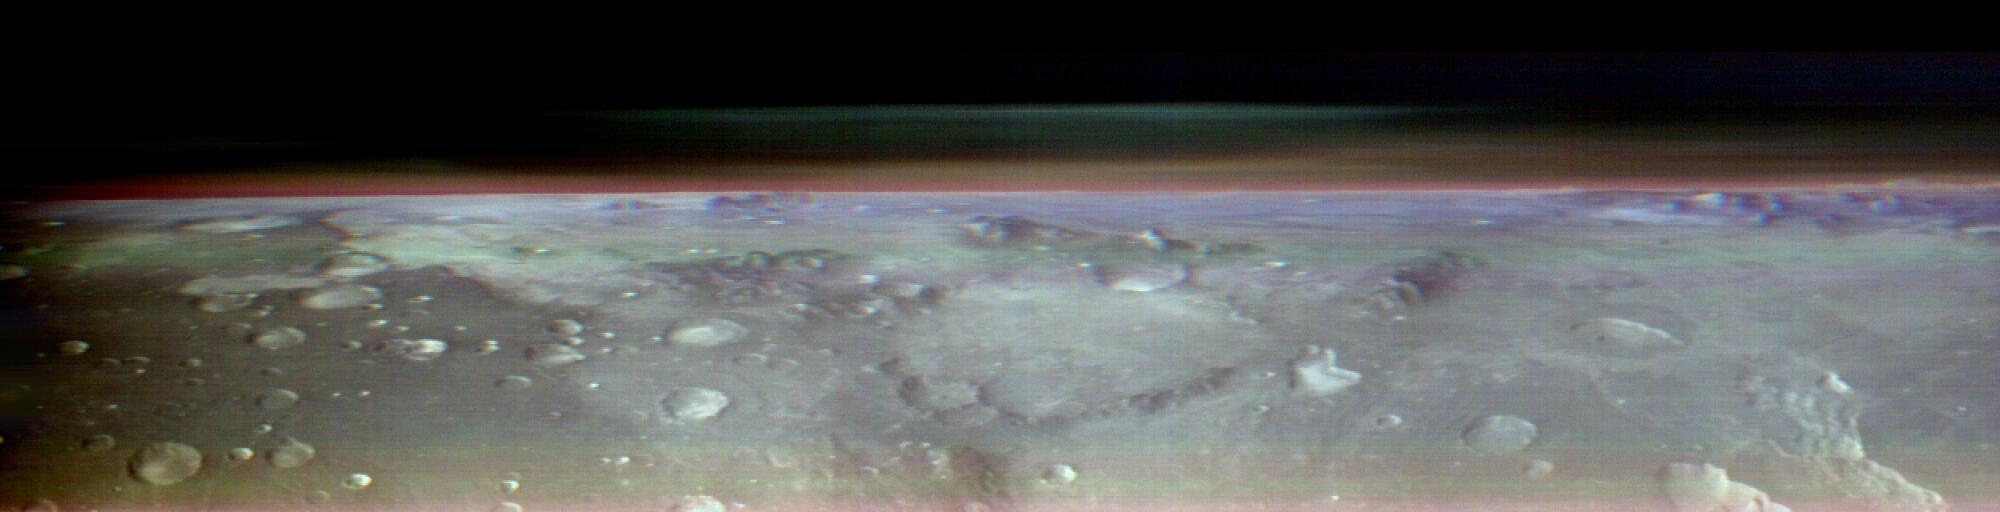 Odyssey orbiter capturing Mars' horizon